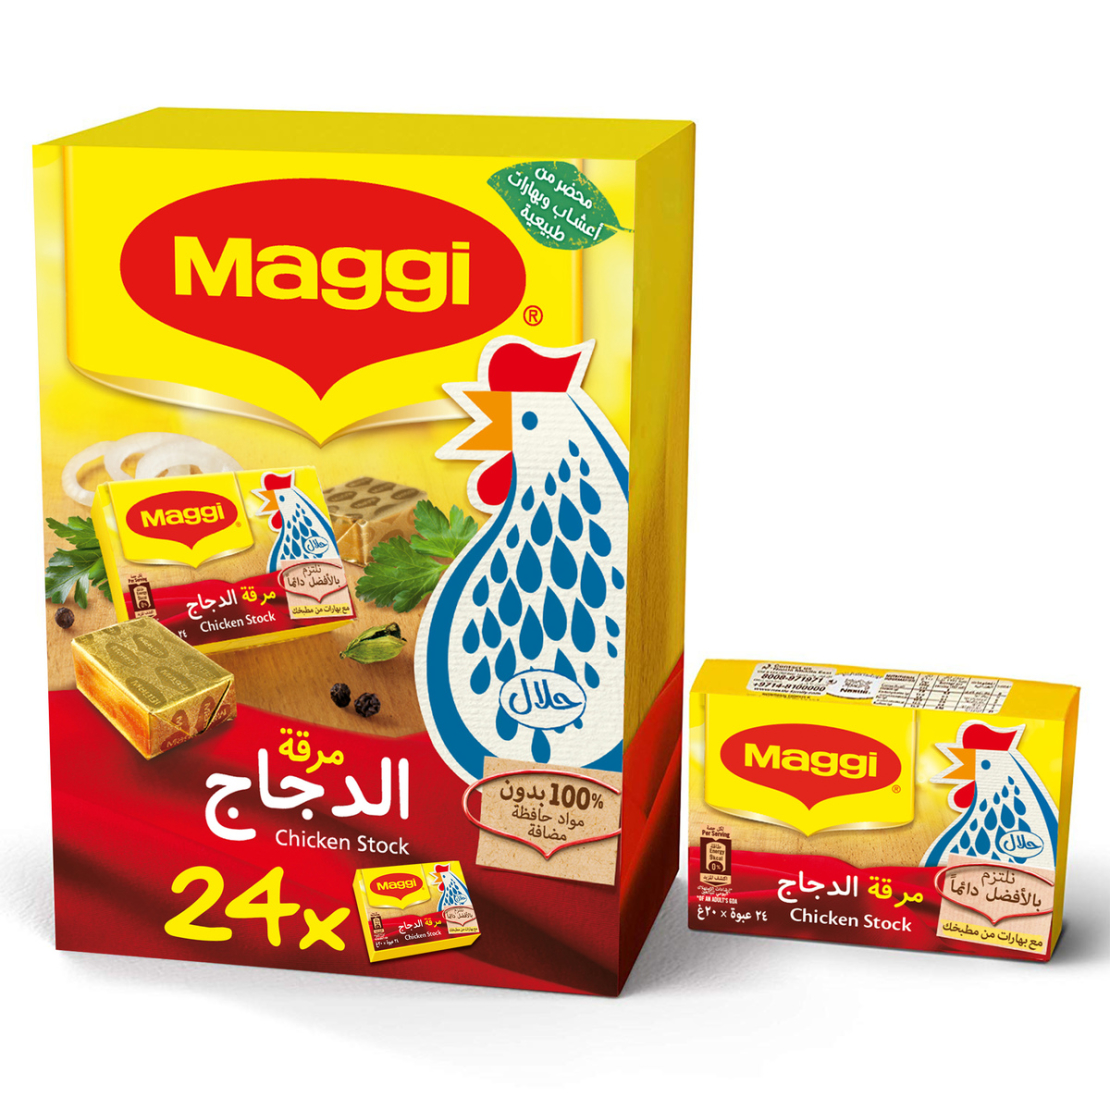 Maggi - Chicken stock box 24 pcs